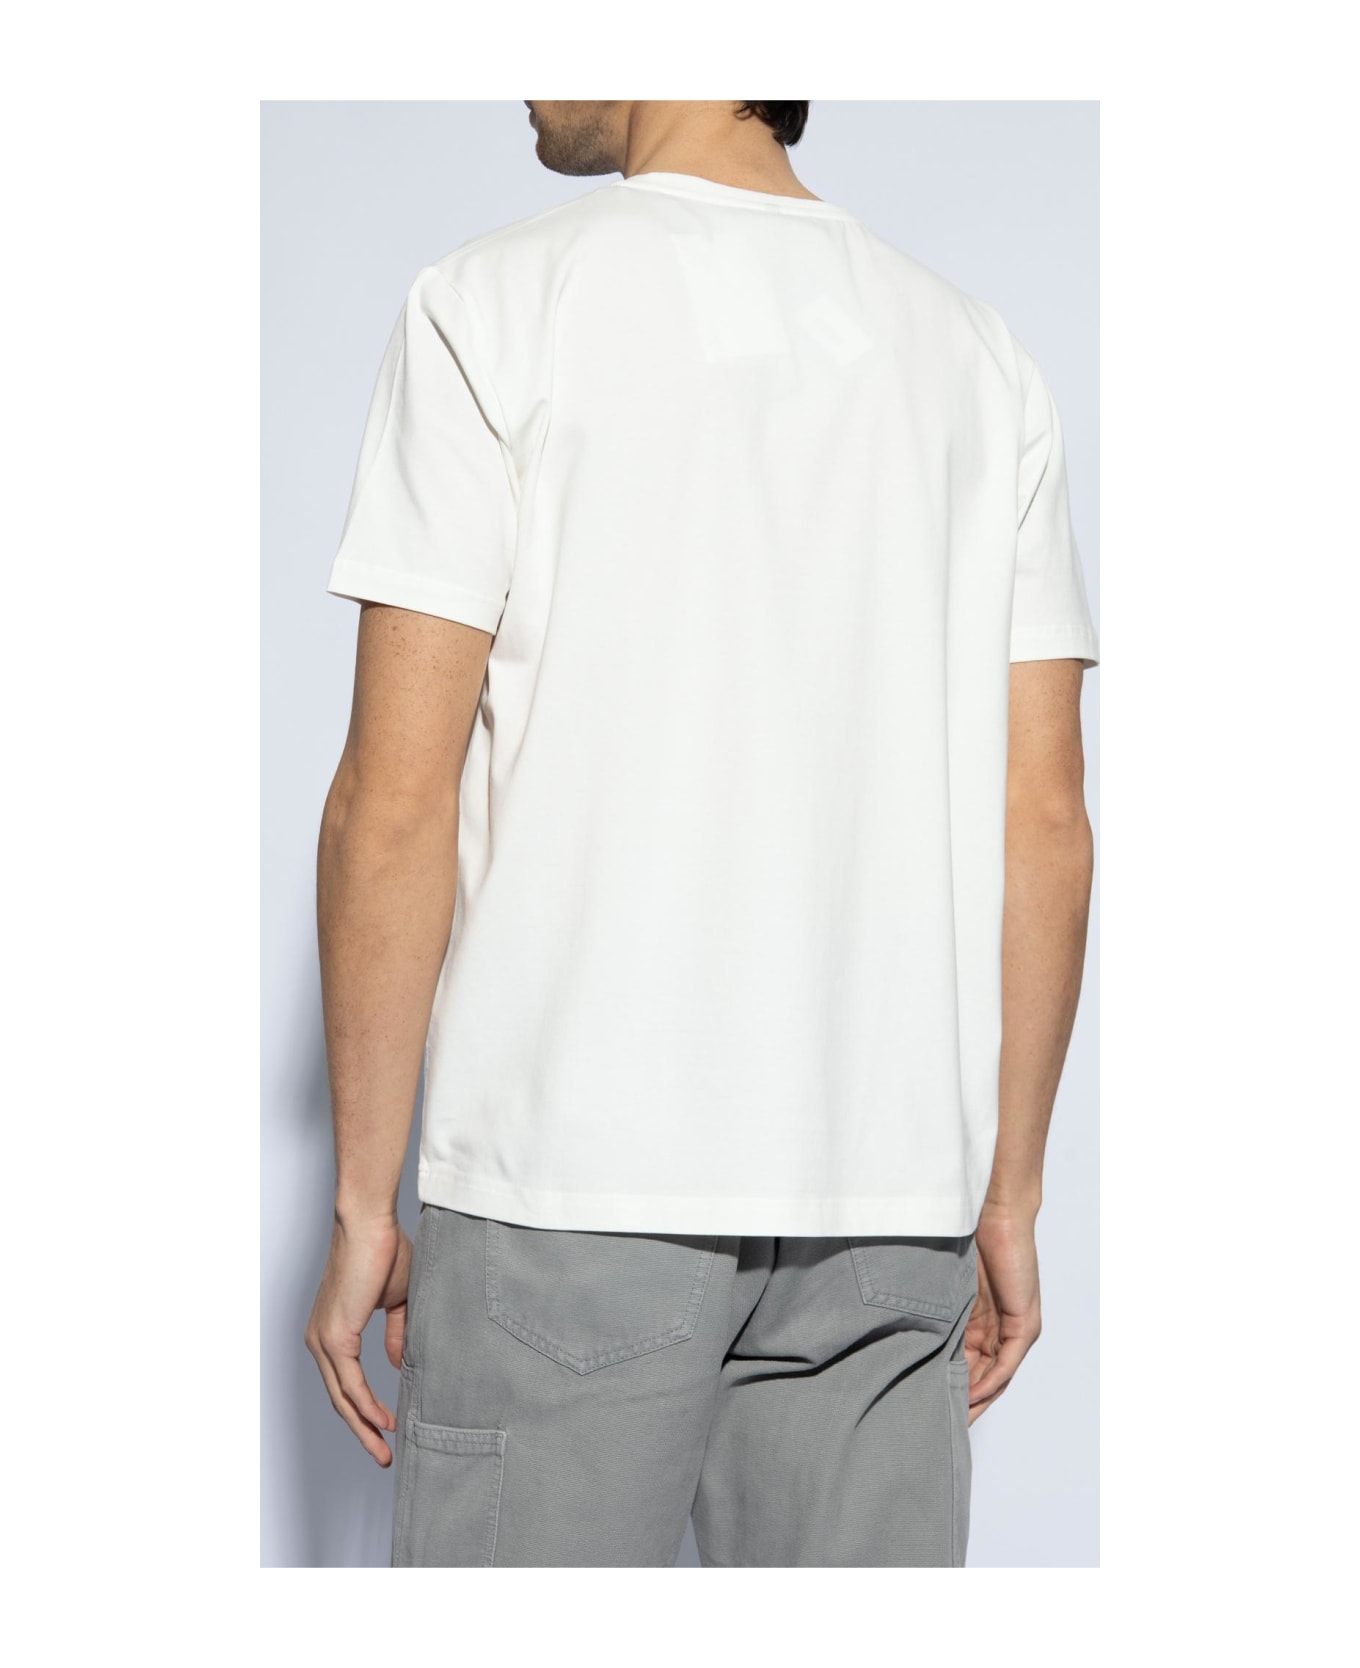 Iceberg Printed T-shirt - WHITE シャツ